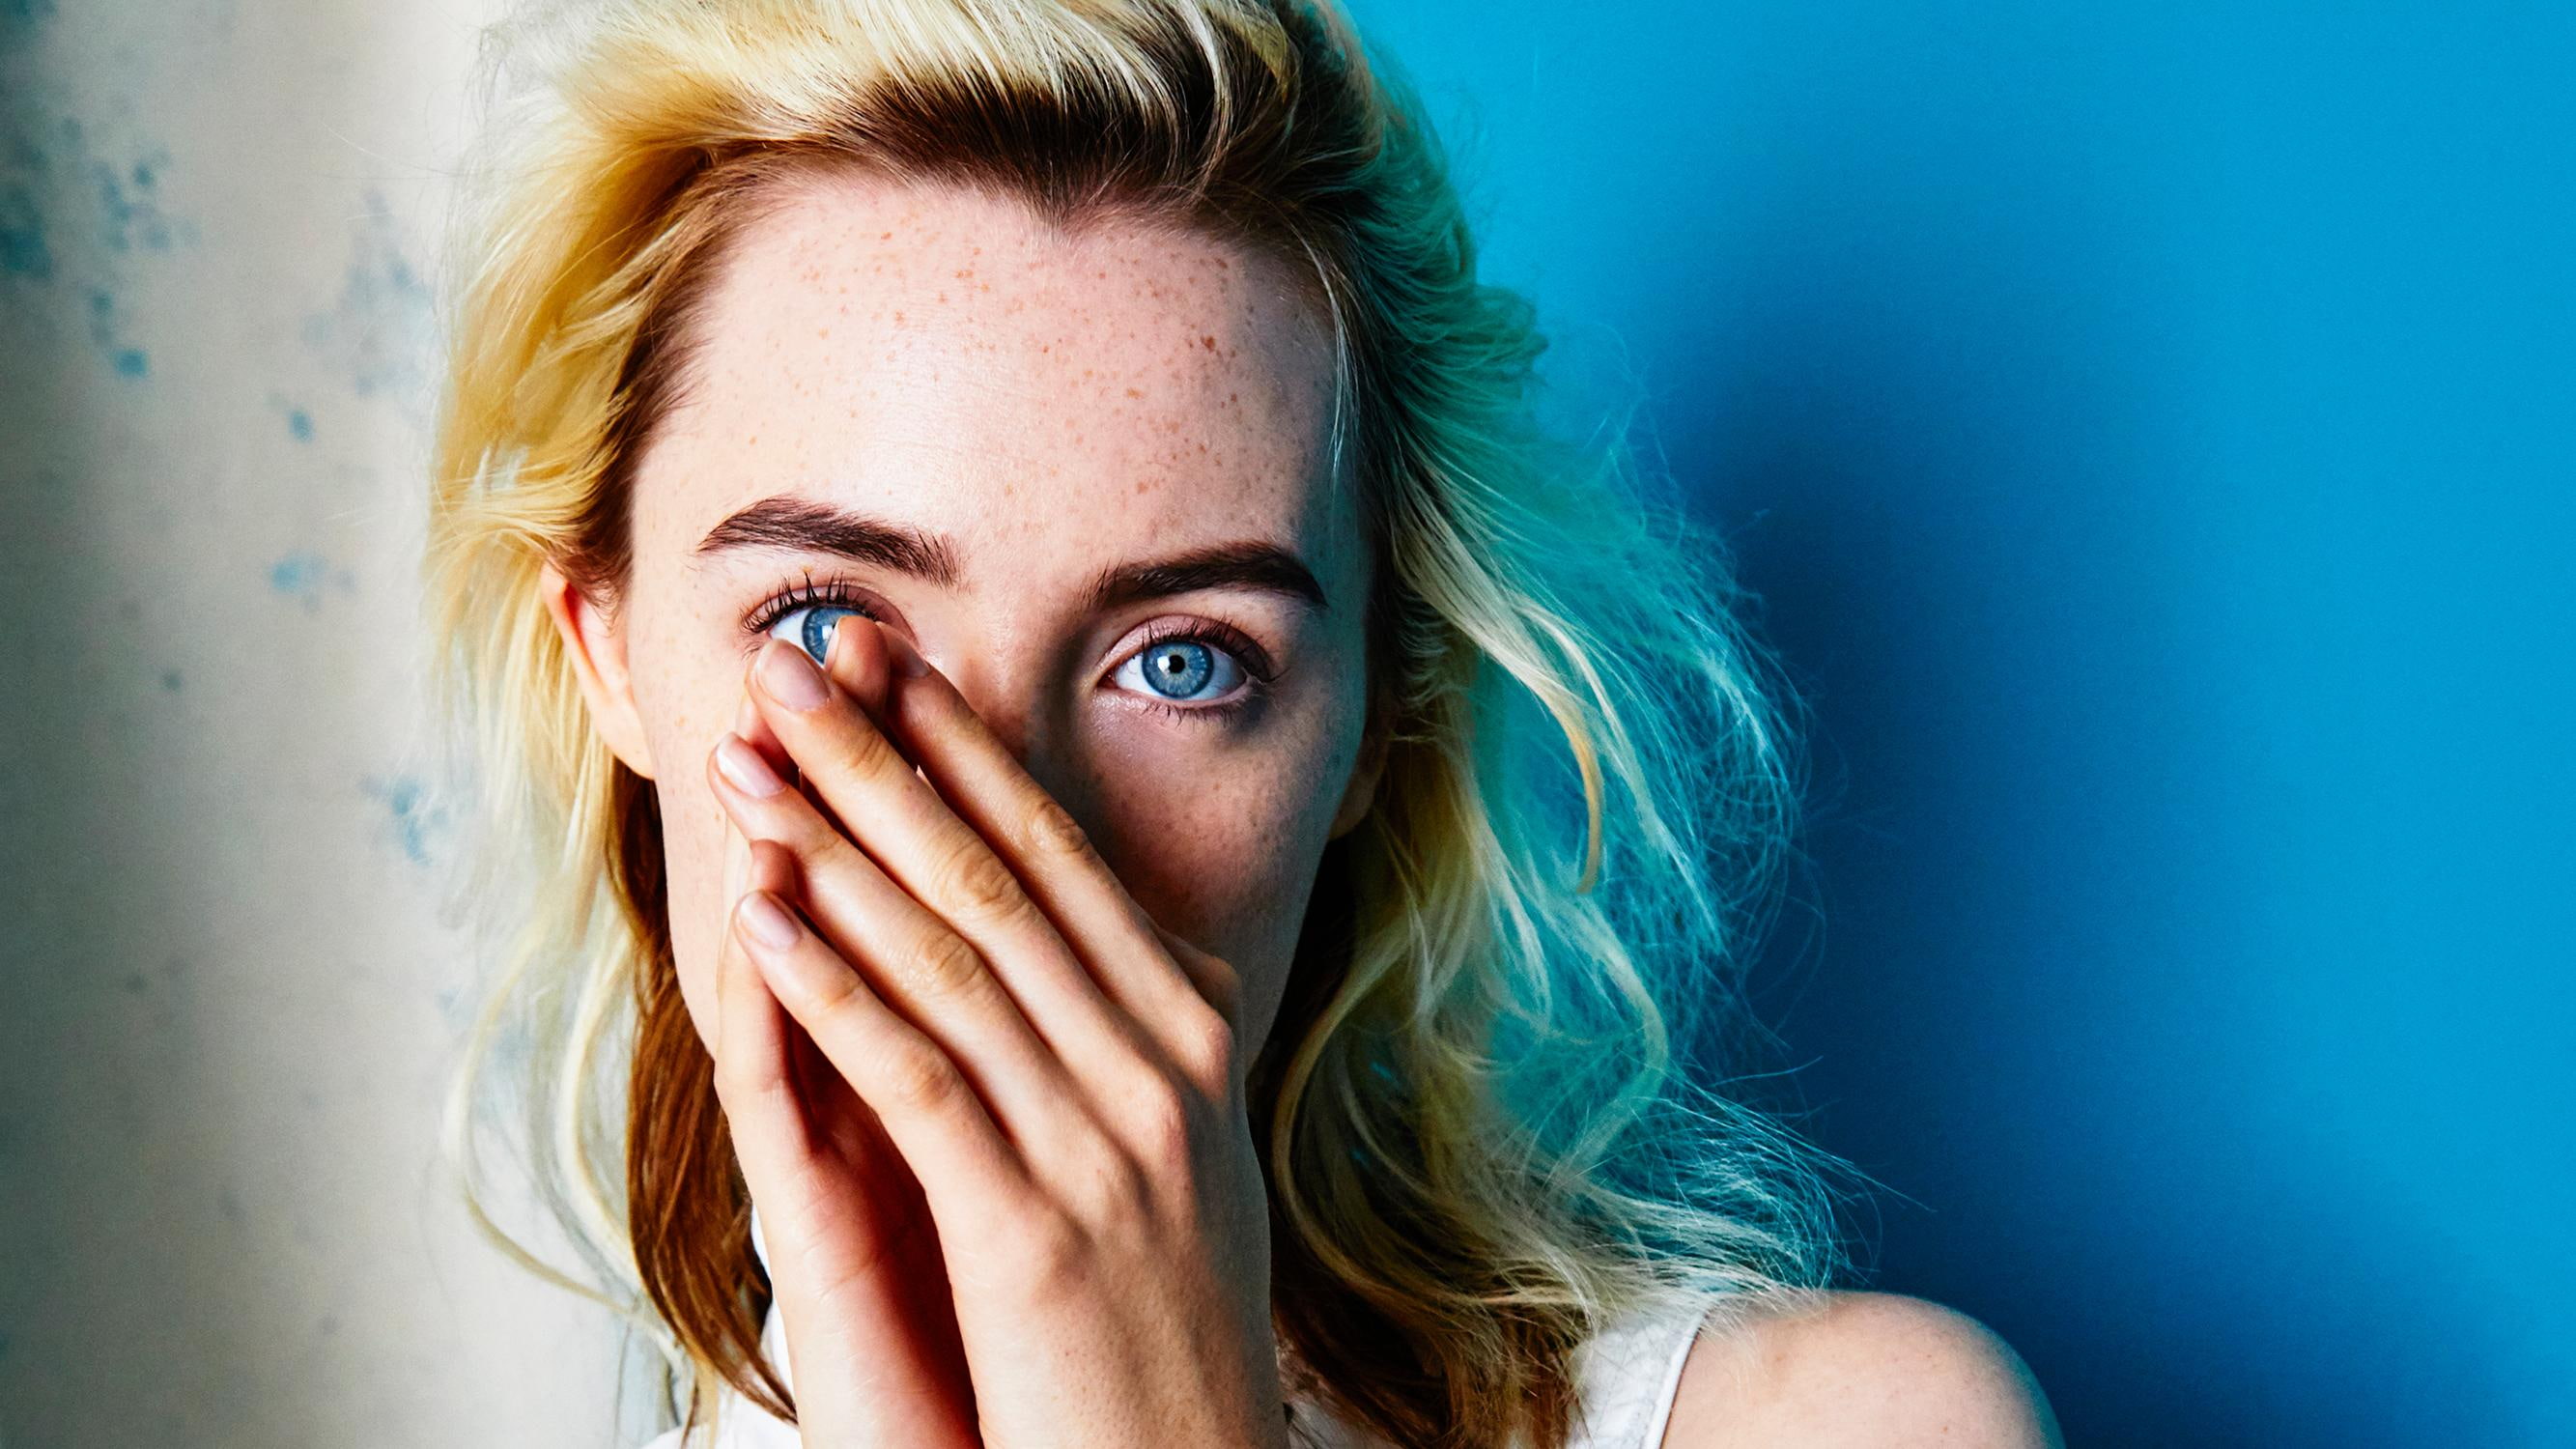 Saoirse Ronan, actress, women, blue eyes, portrait, young adult